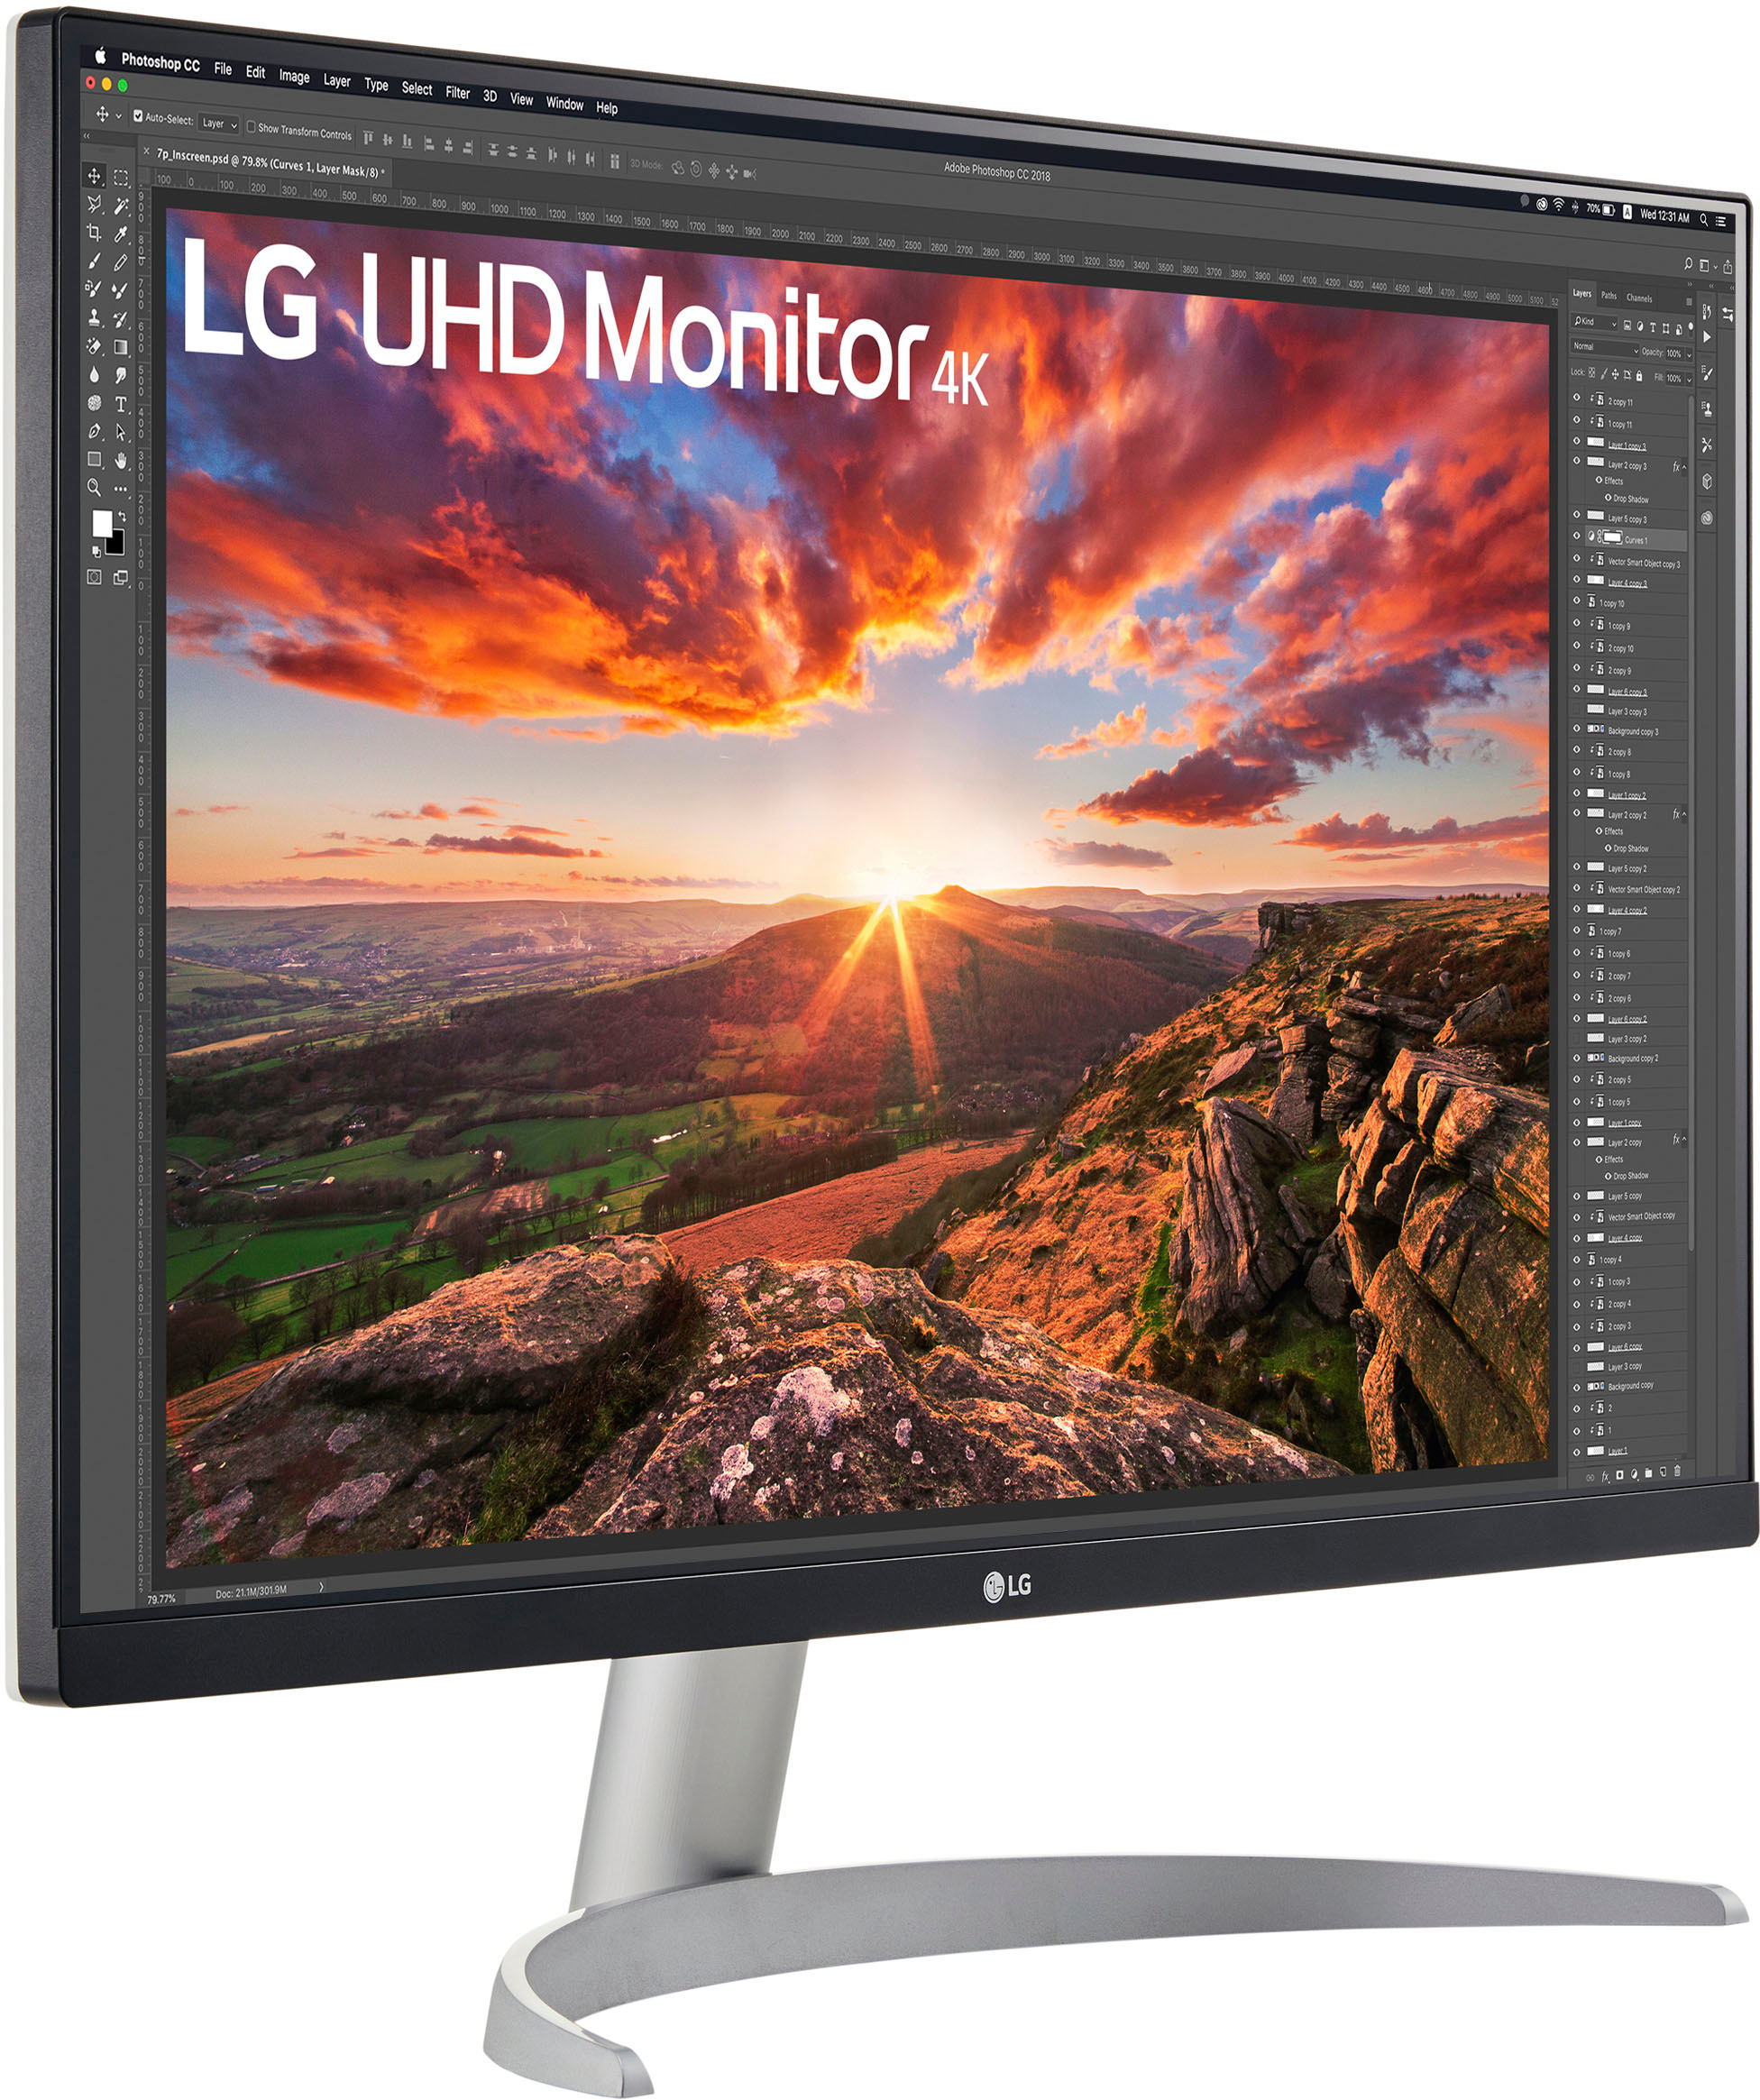 LG 27” IPS LED 4K UHD AMD FreeSync Monitor with HDR (DisplayPort